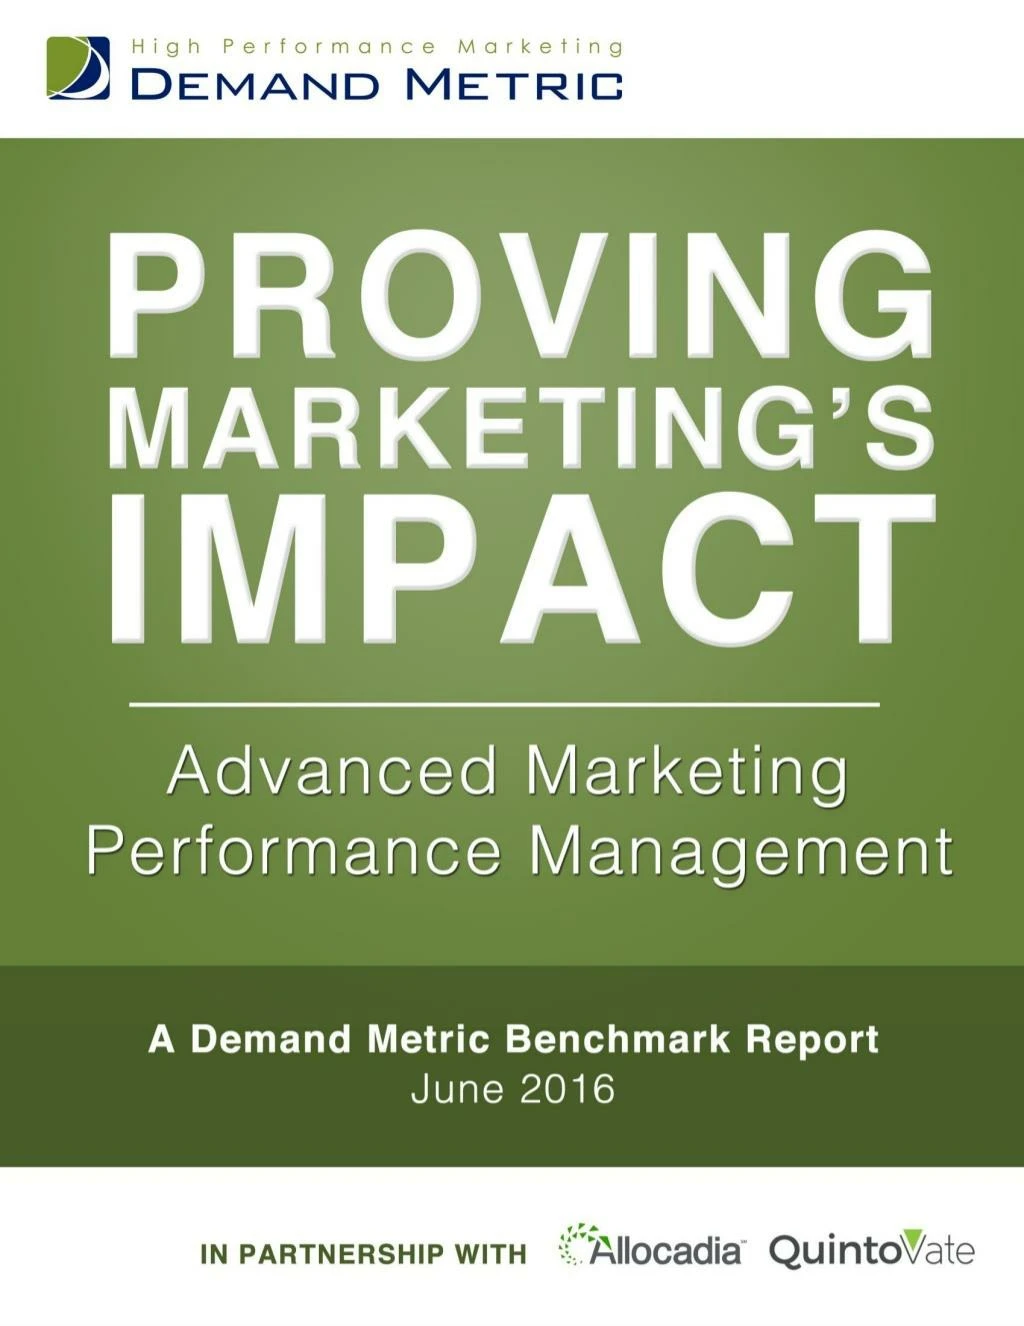 advanced marketing performance management benchmark report